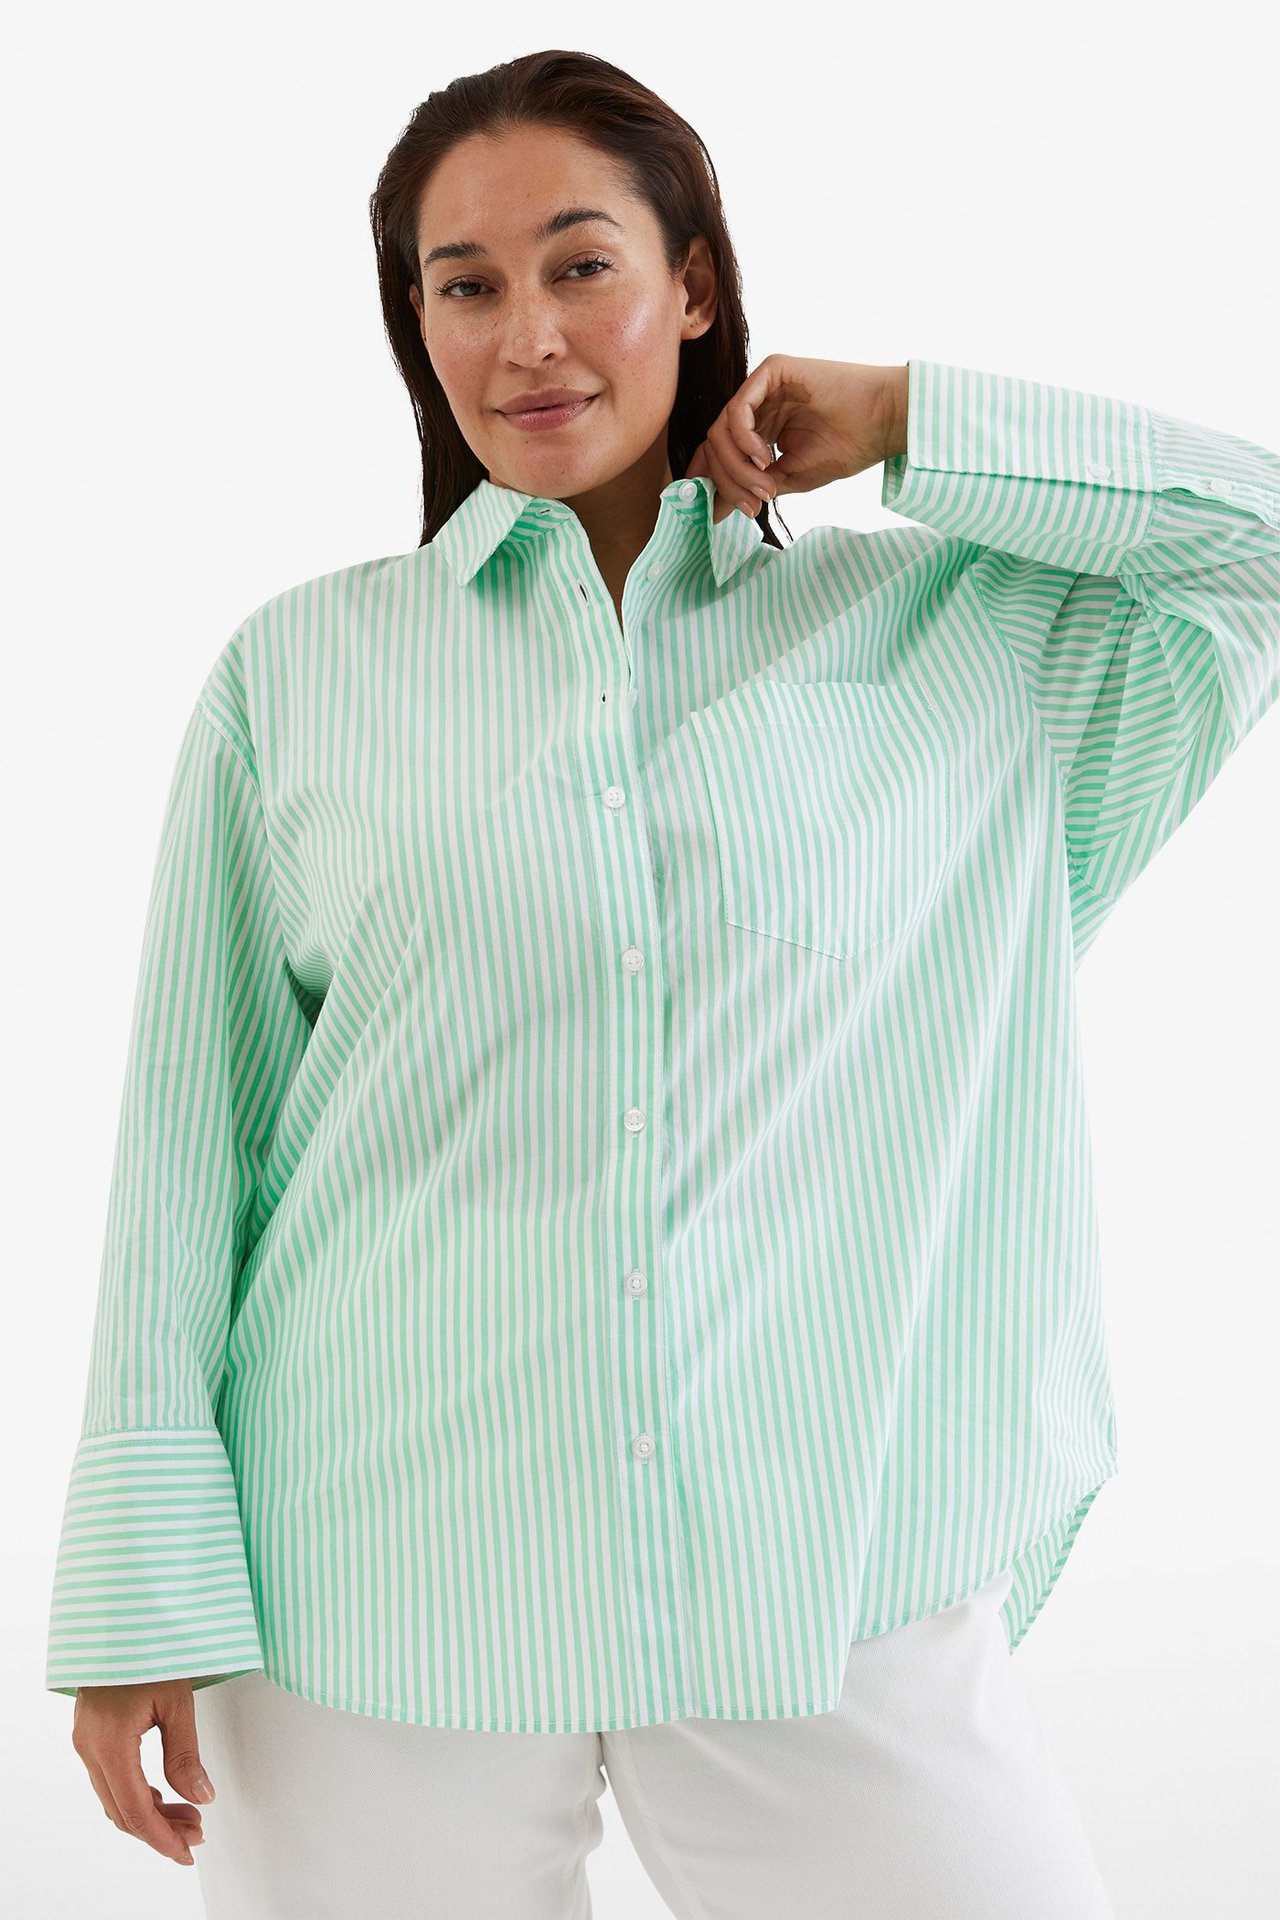 Stripete skjorte - Grønn - 173cm / Storlek: XL - 1